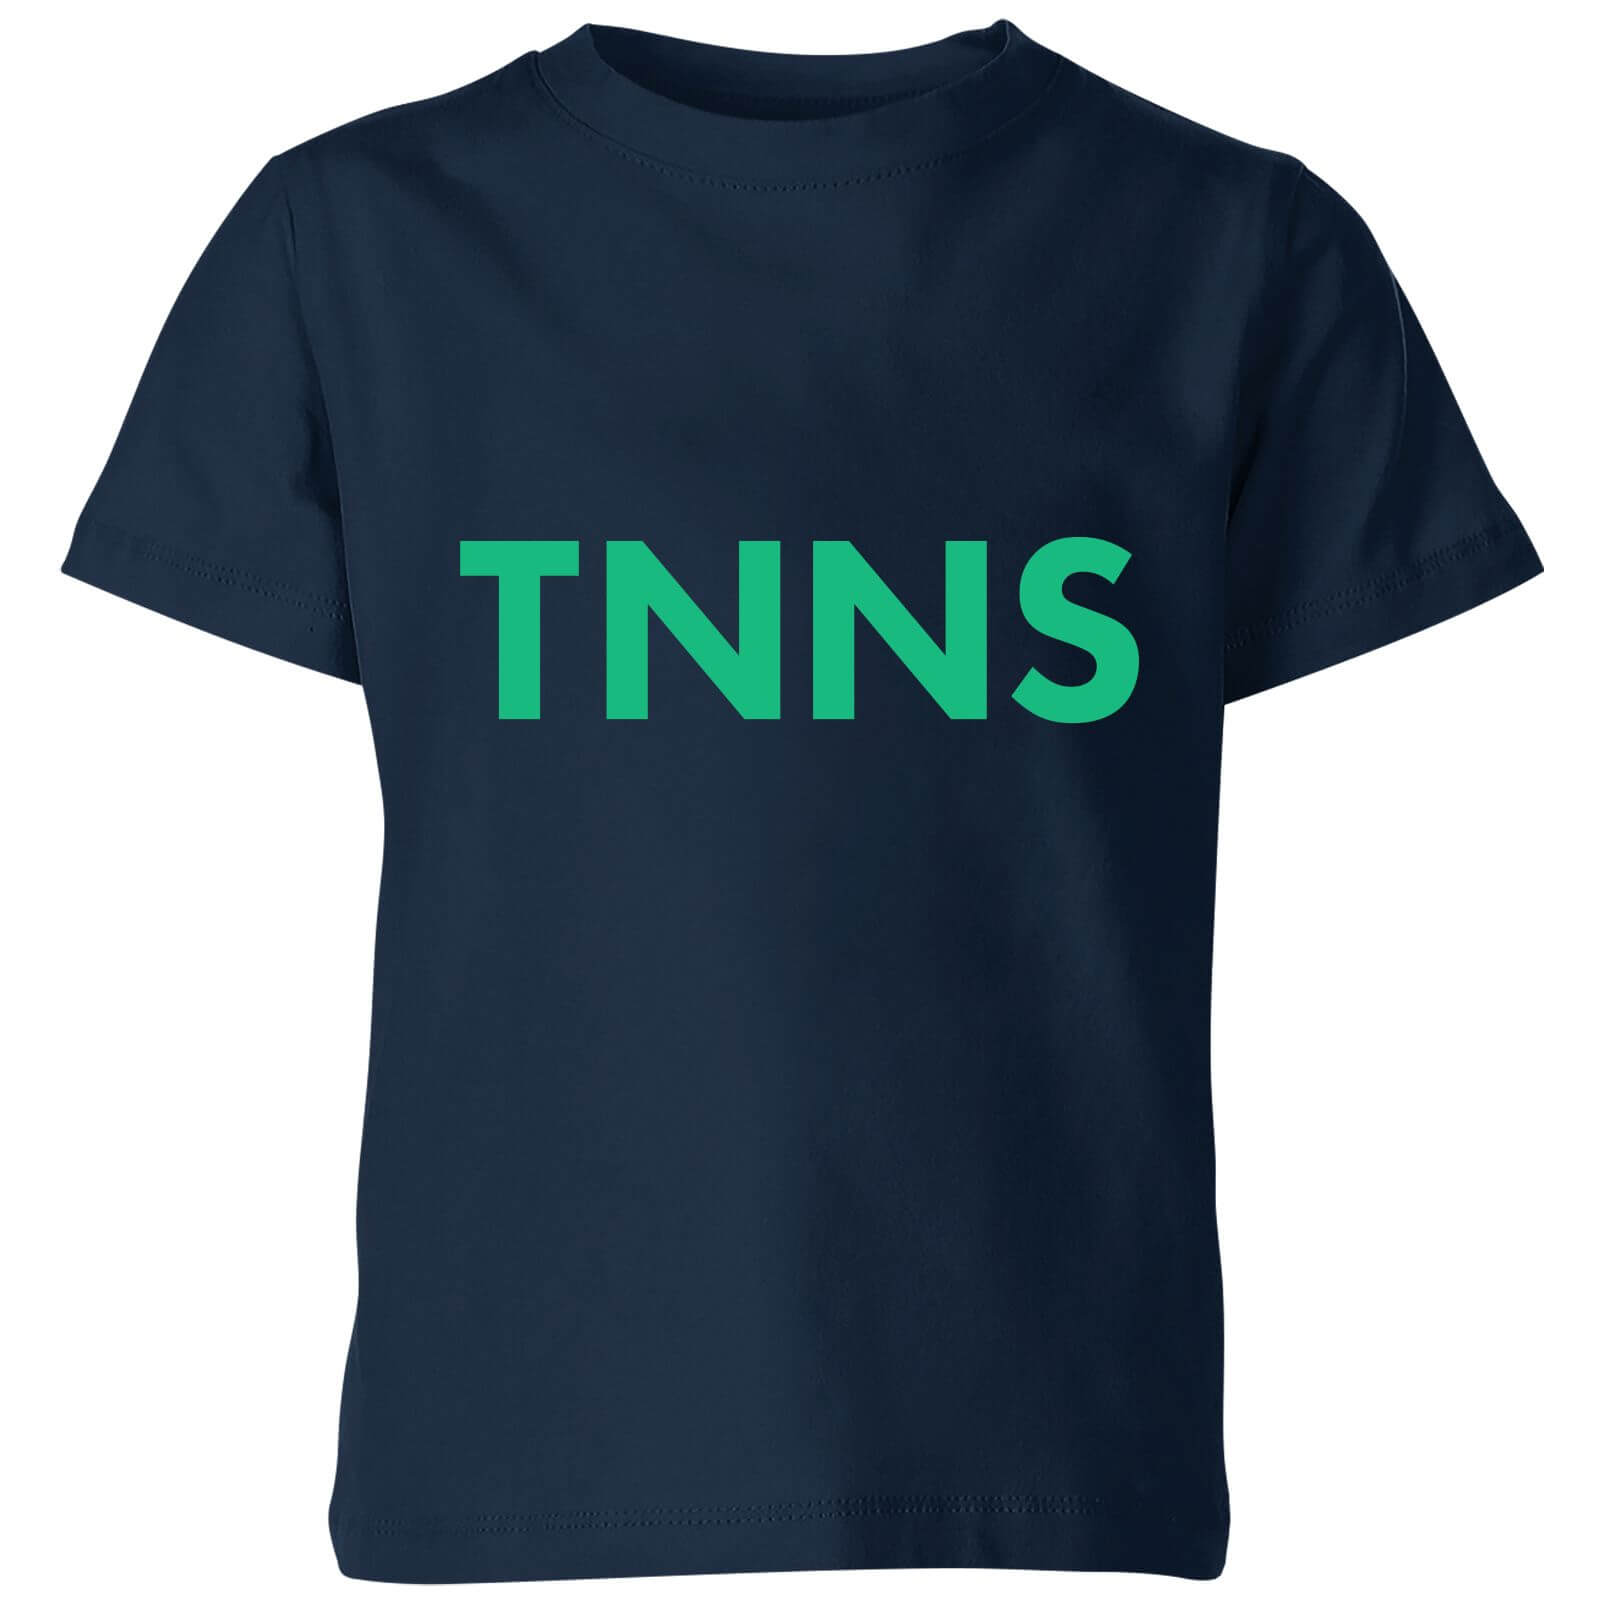 Tnns Kids' T-Shirt - Navy - 3-4 Years - Navy